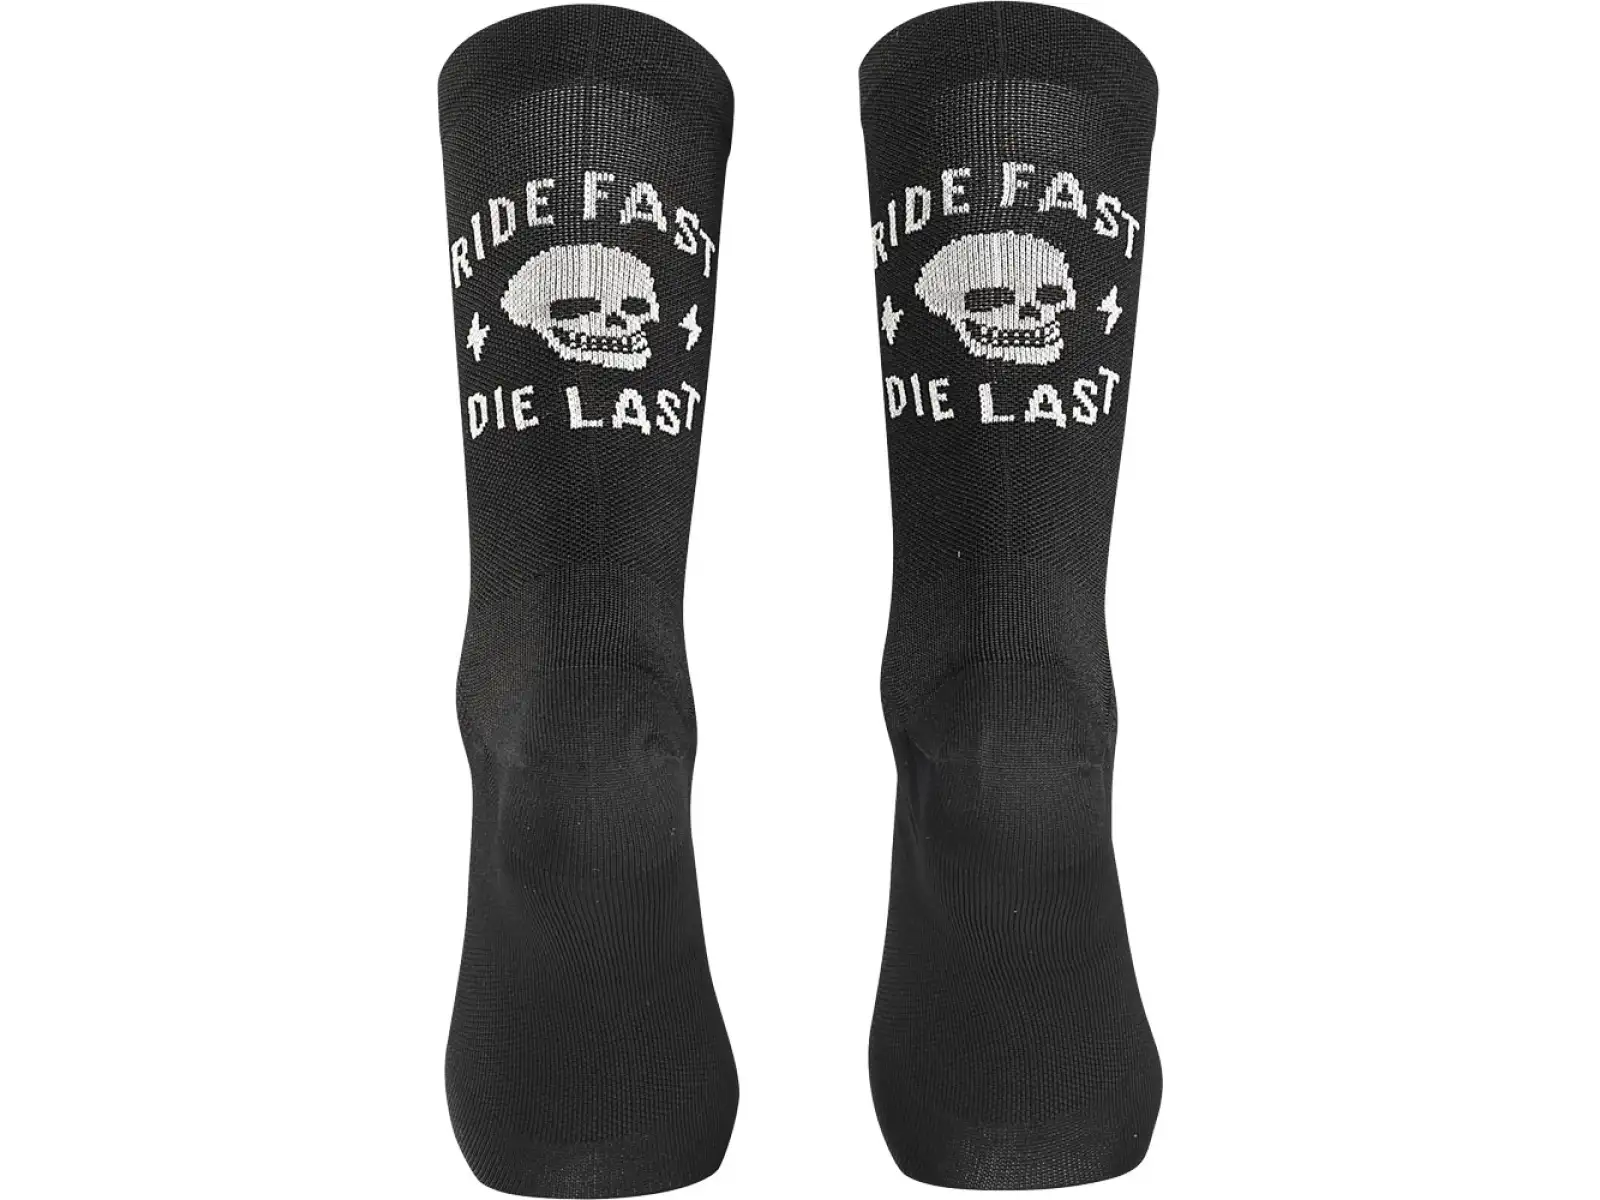 Northwave Ride Fast Die Last pánské ponožky Black